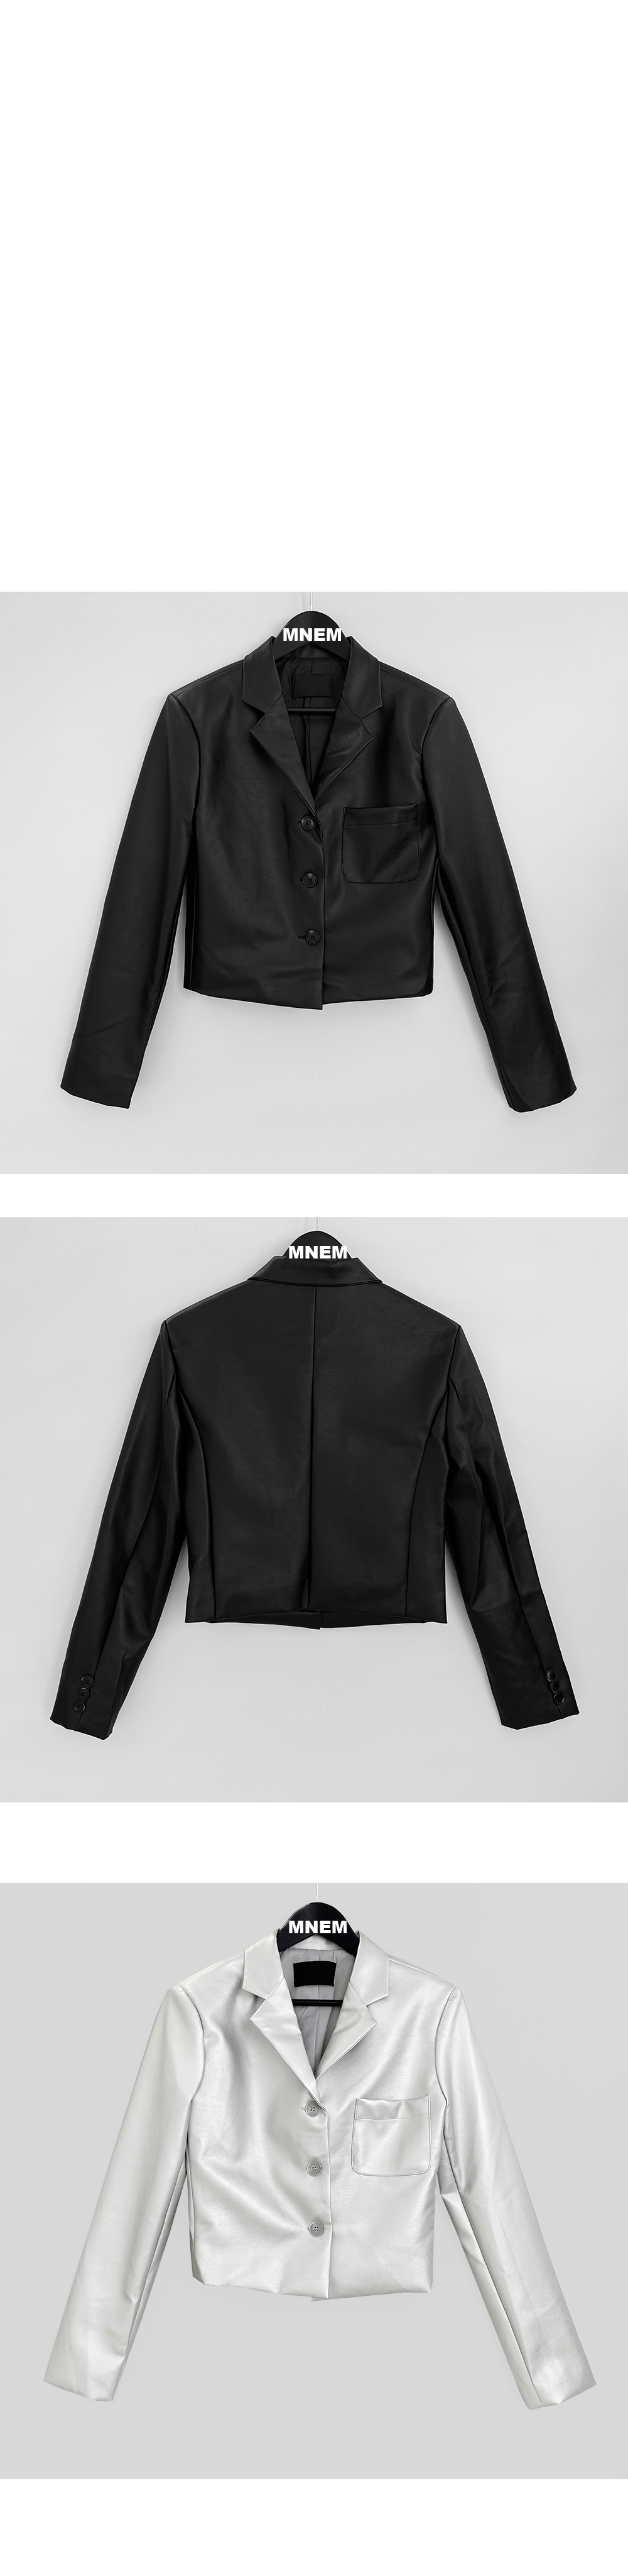 jacket charcoal color image-S3L1